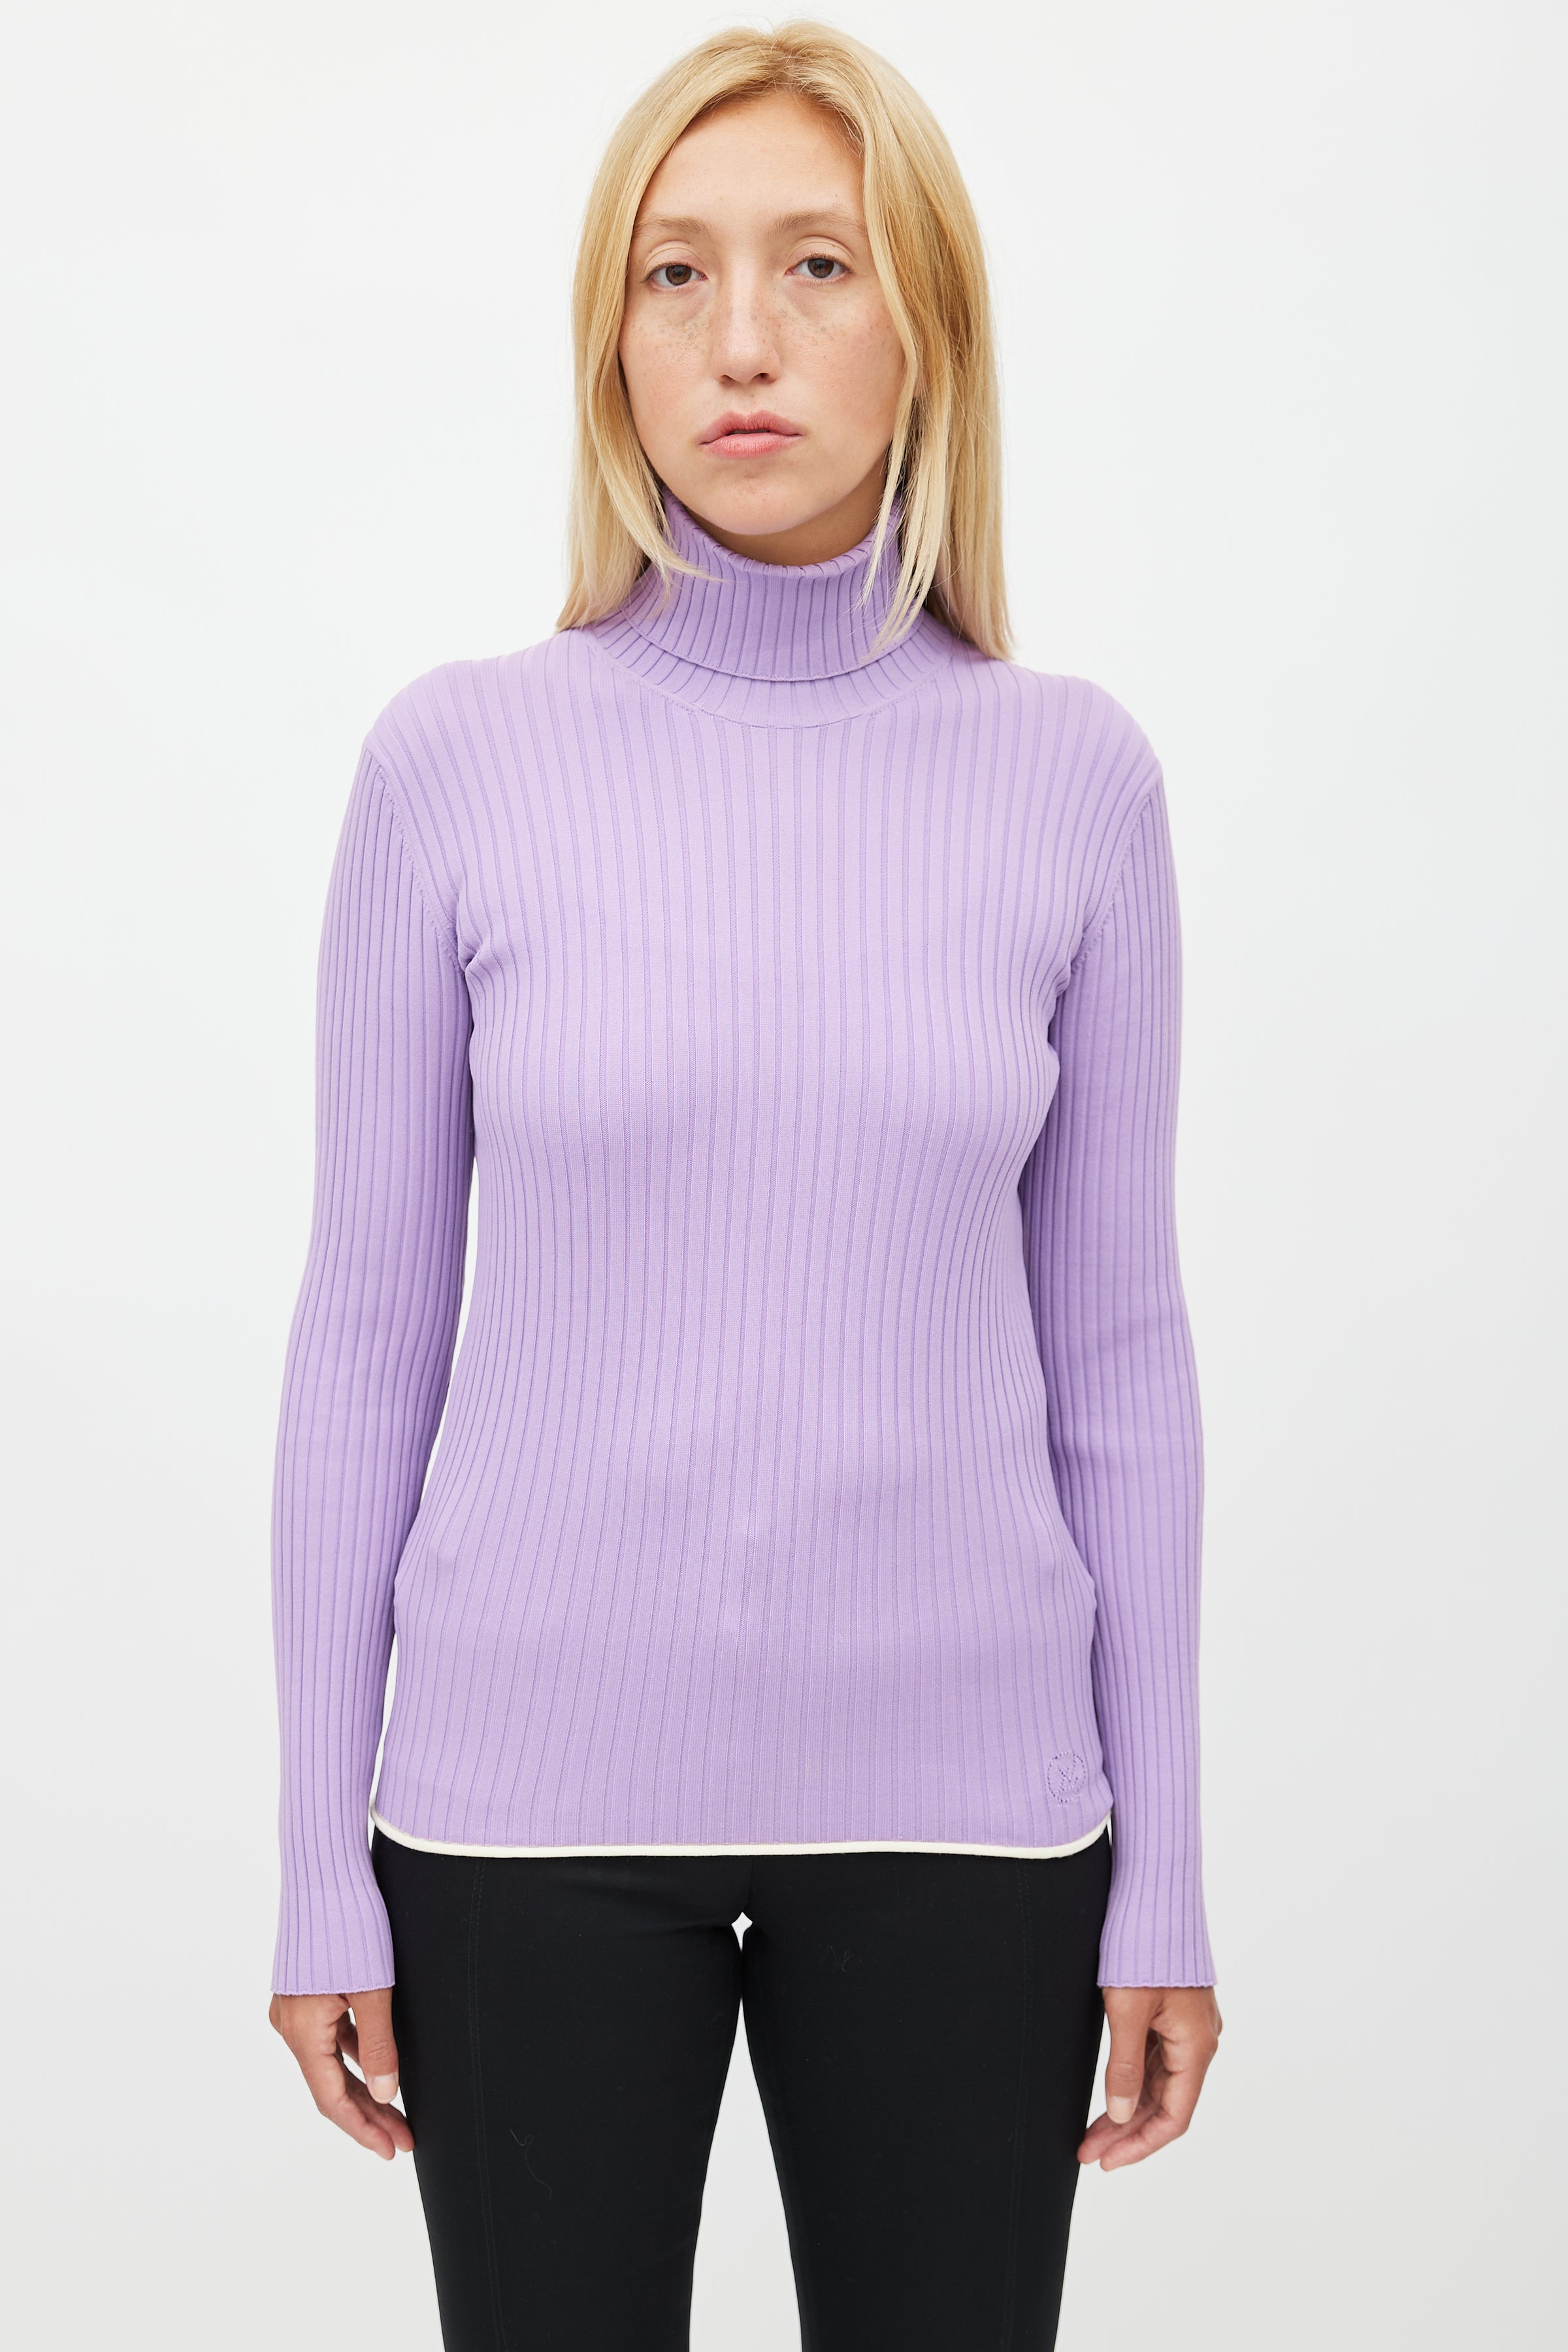 Louis Vuitton Turtle Neck Sweater